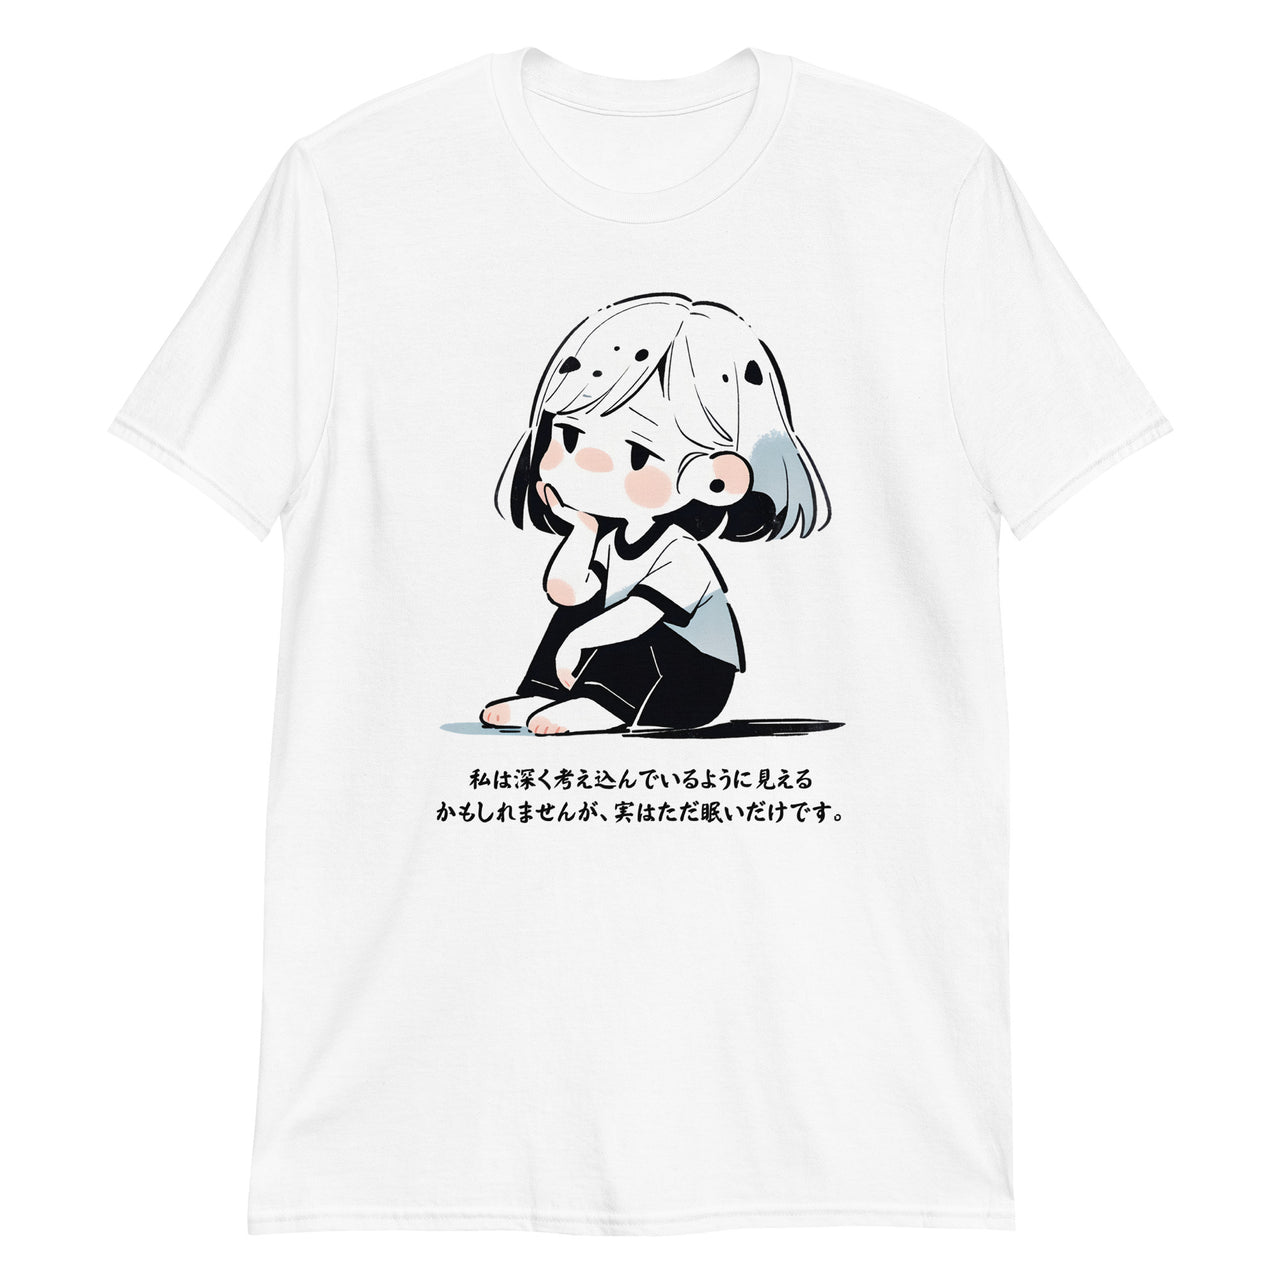 Manga Girl's Sleepy Thoughts in Japanese T-Shirt